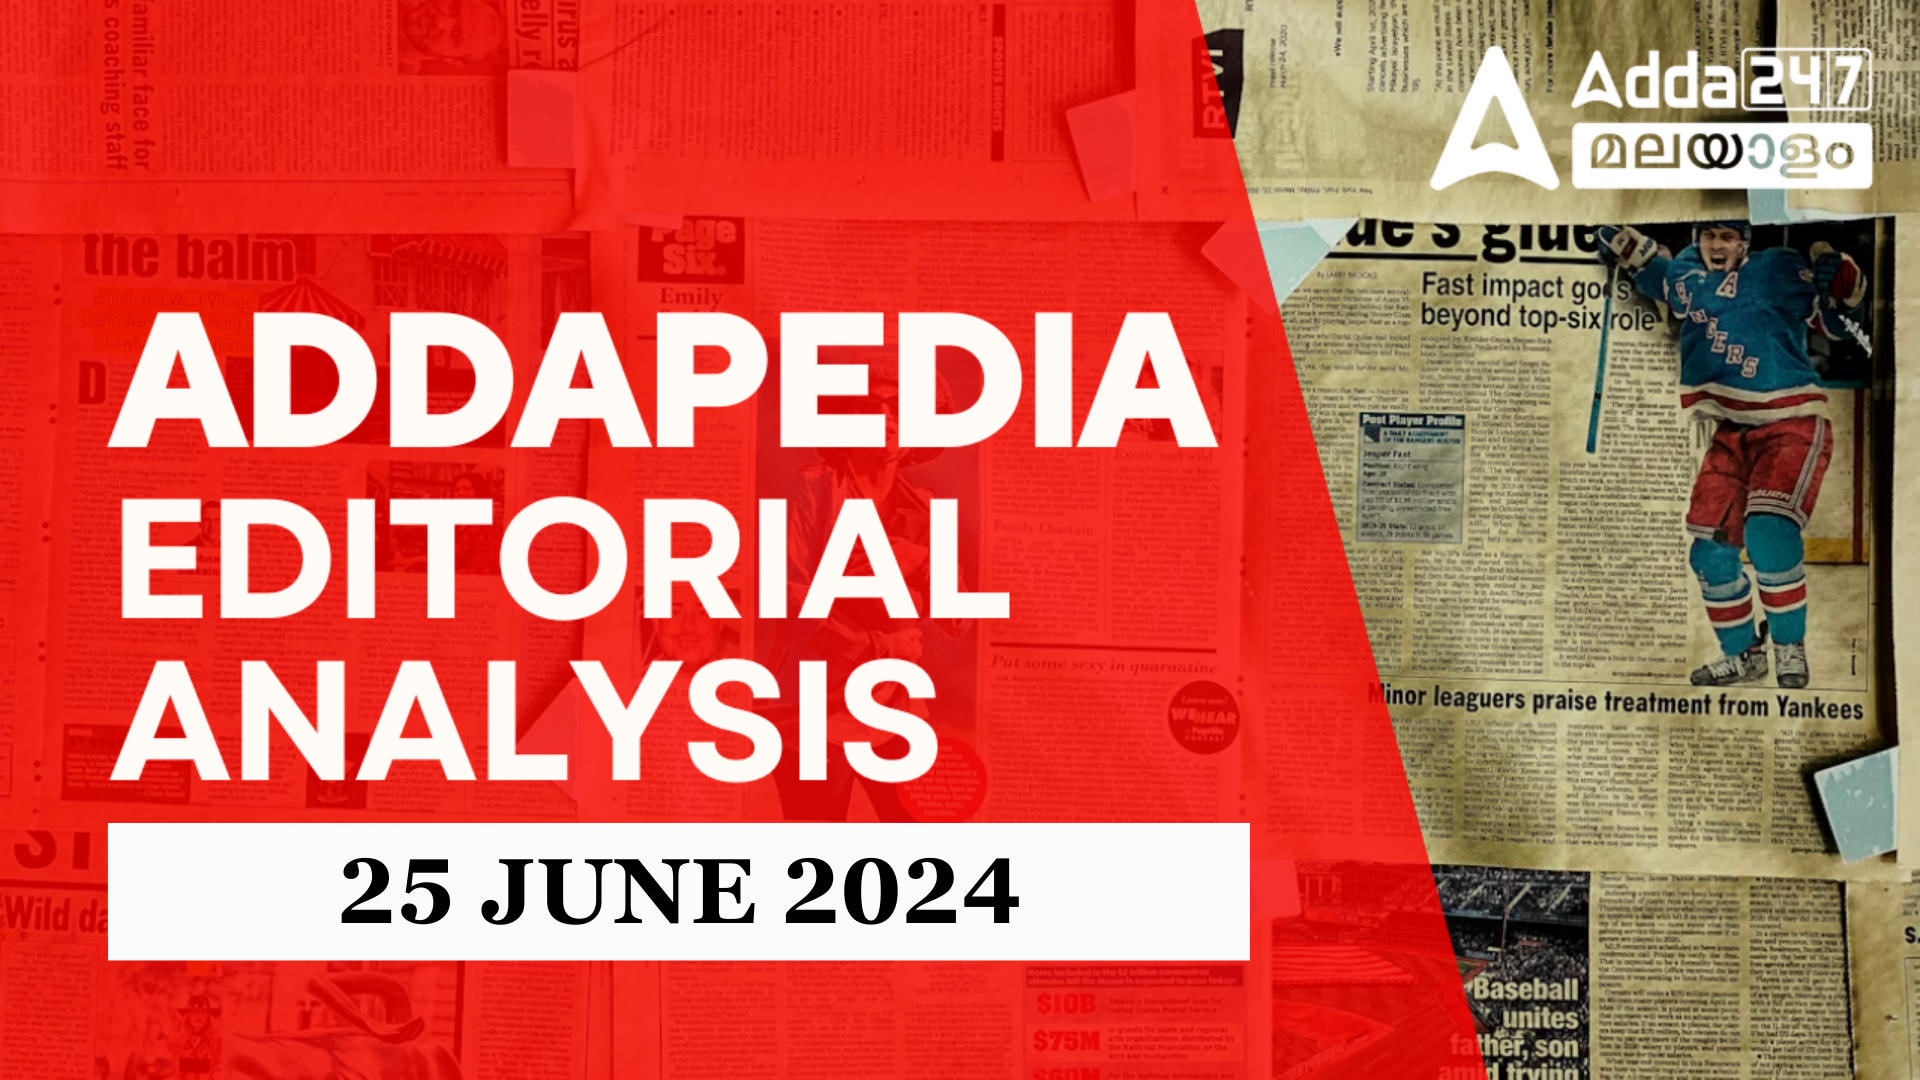 Addapedia Editorial Analysis - 25 June 2024, Download PDF